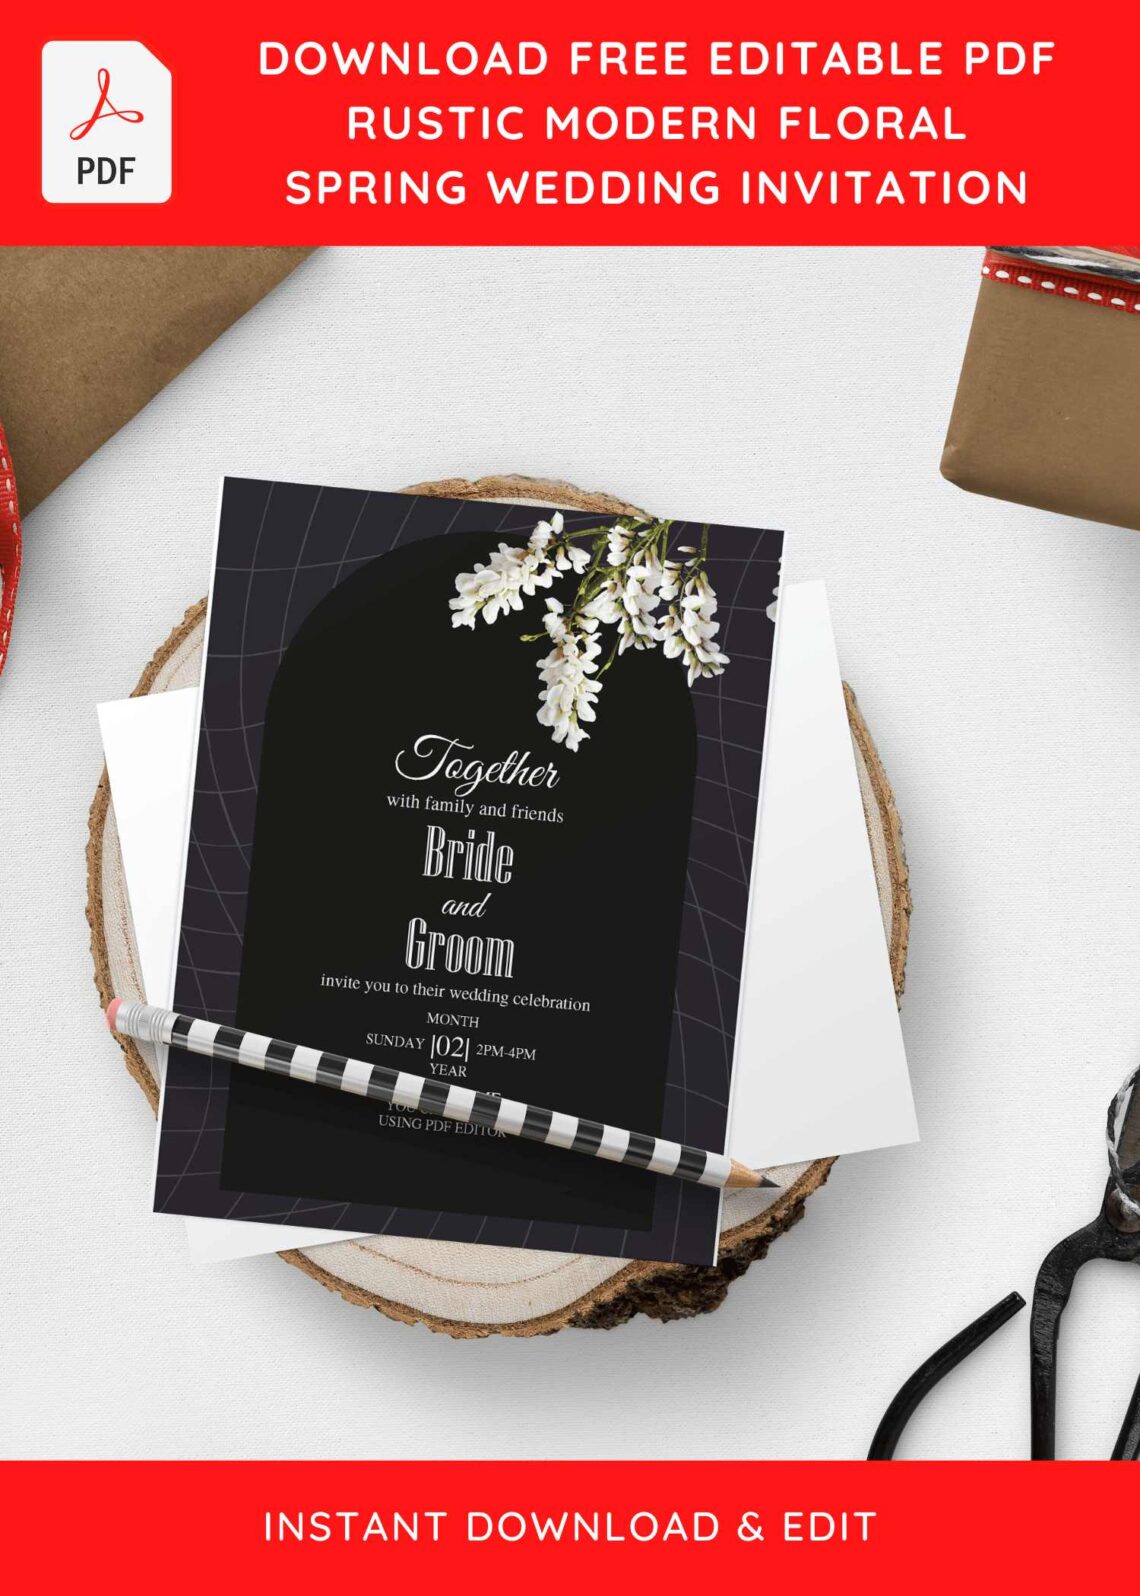 (Free Editable PDF) Magic Garden Wedding Invitation Templates with blissful watercolor Cherry Blossom